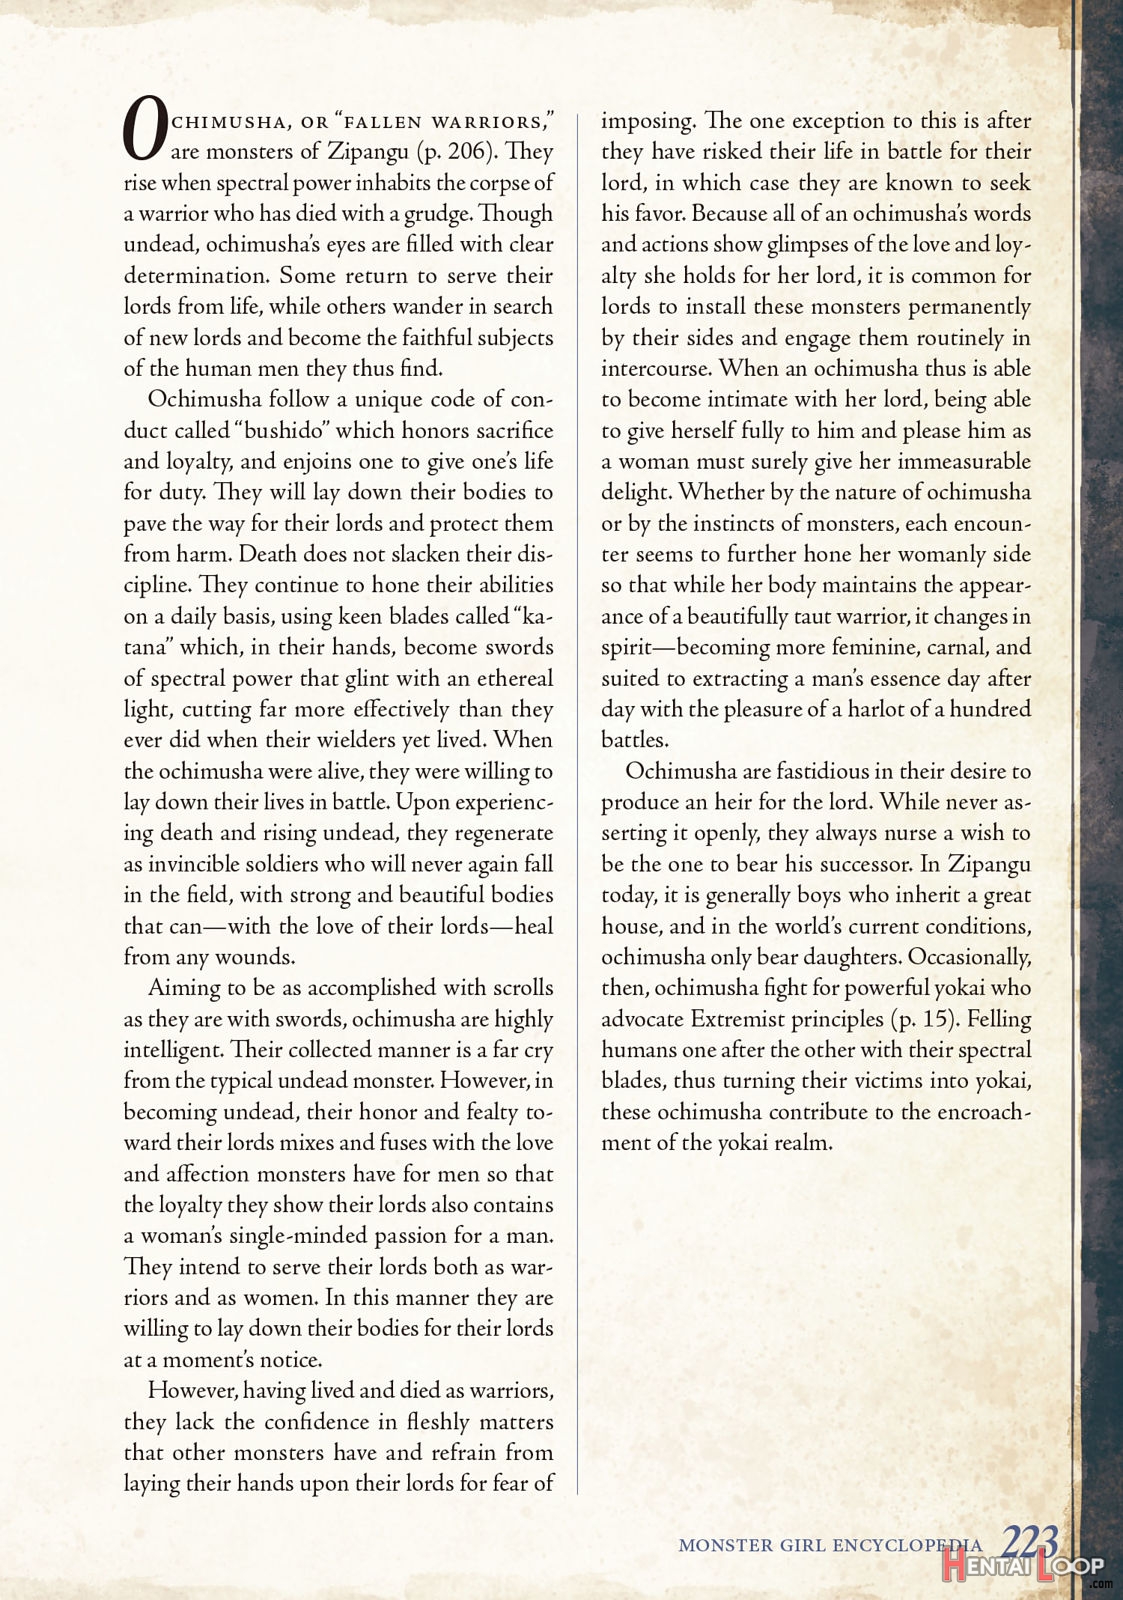 Monster Girl Encyclopedia Vol. 2 page 224